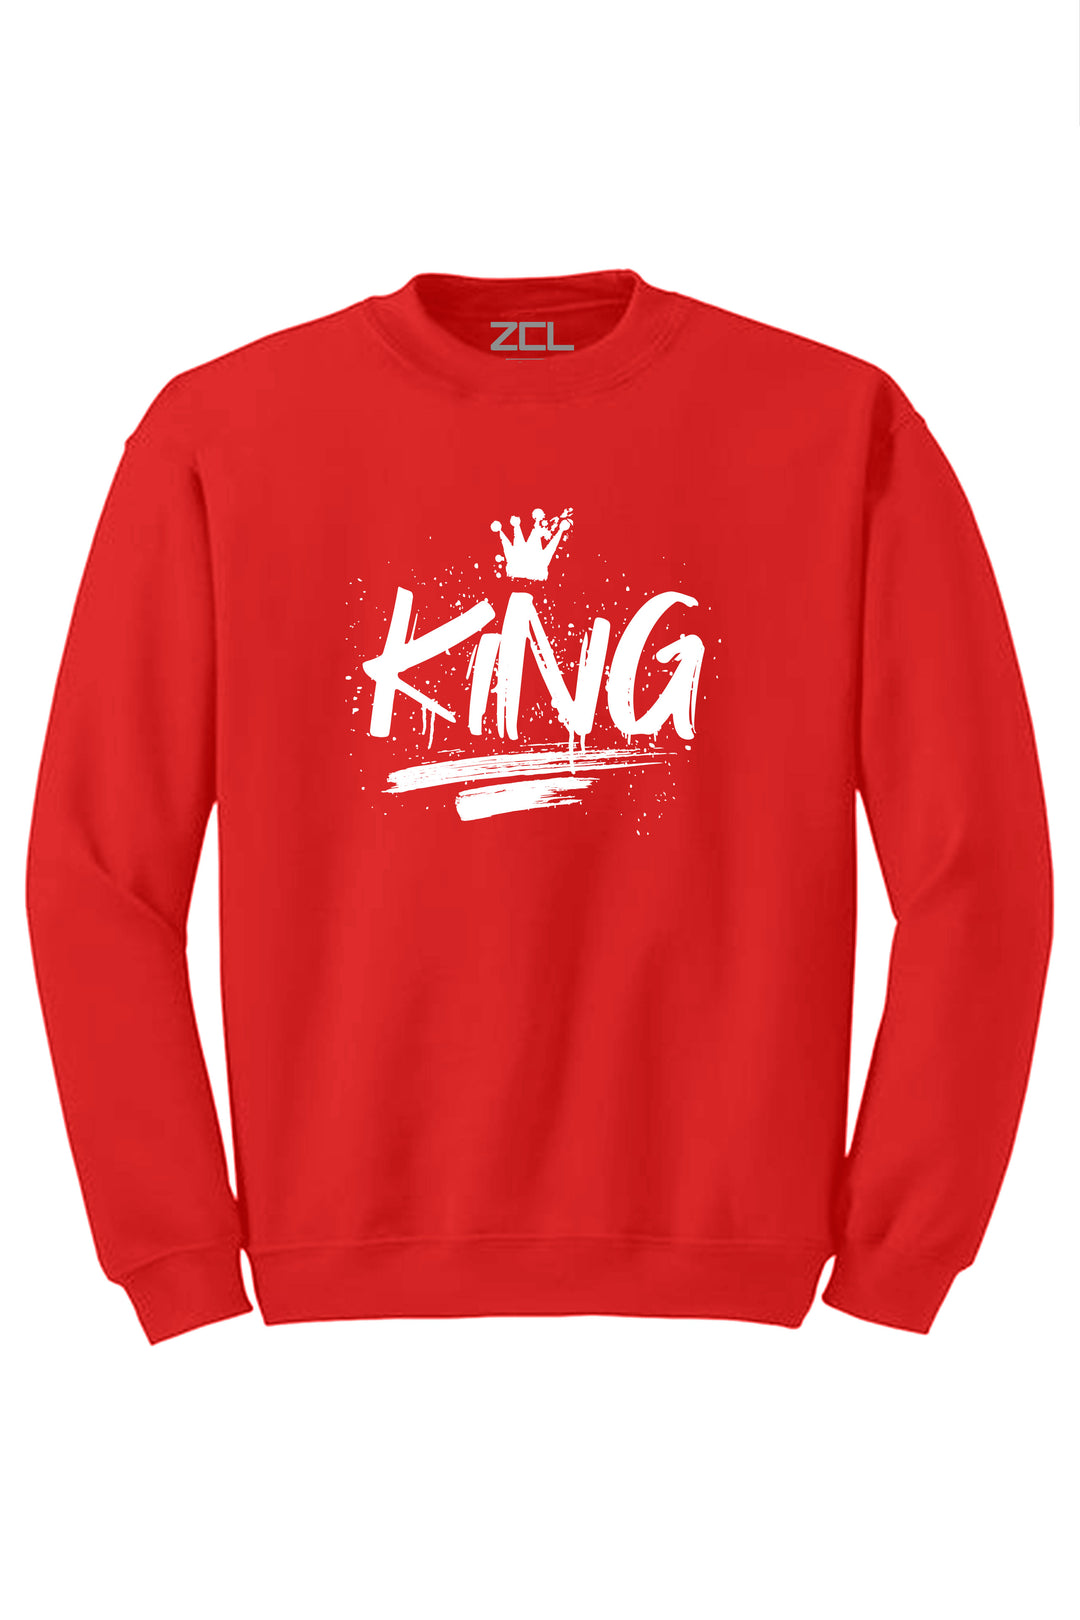 King Crewneck Sweatshirt (White Logo) - Zamage